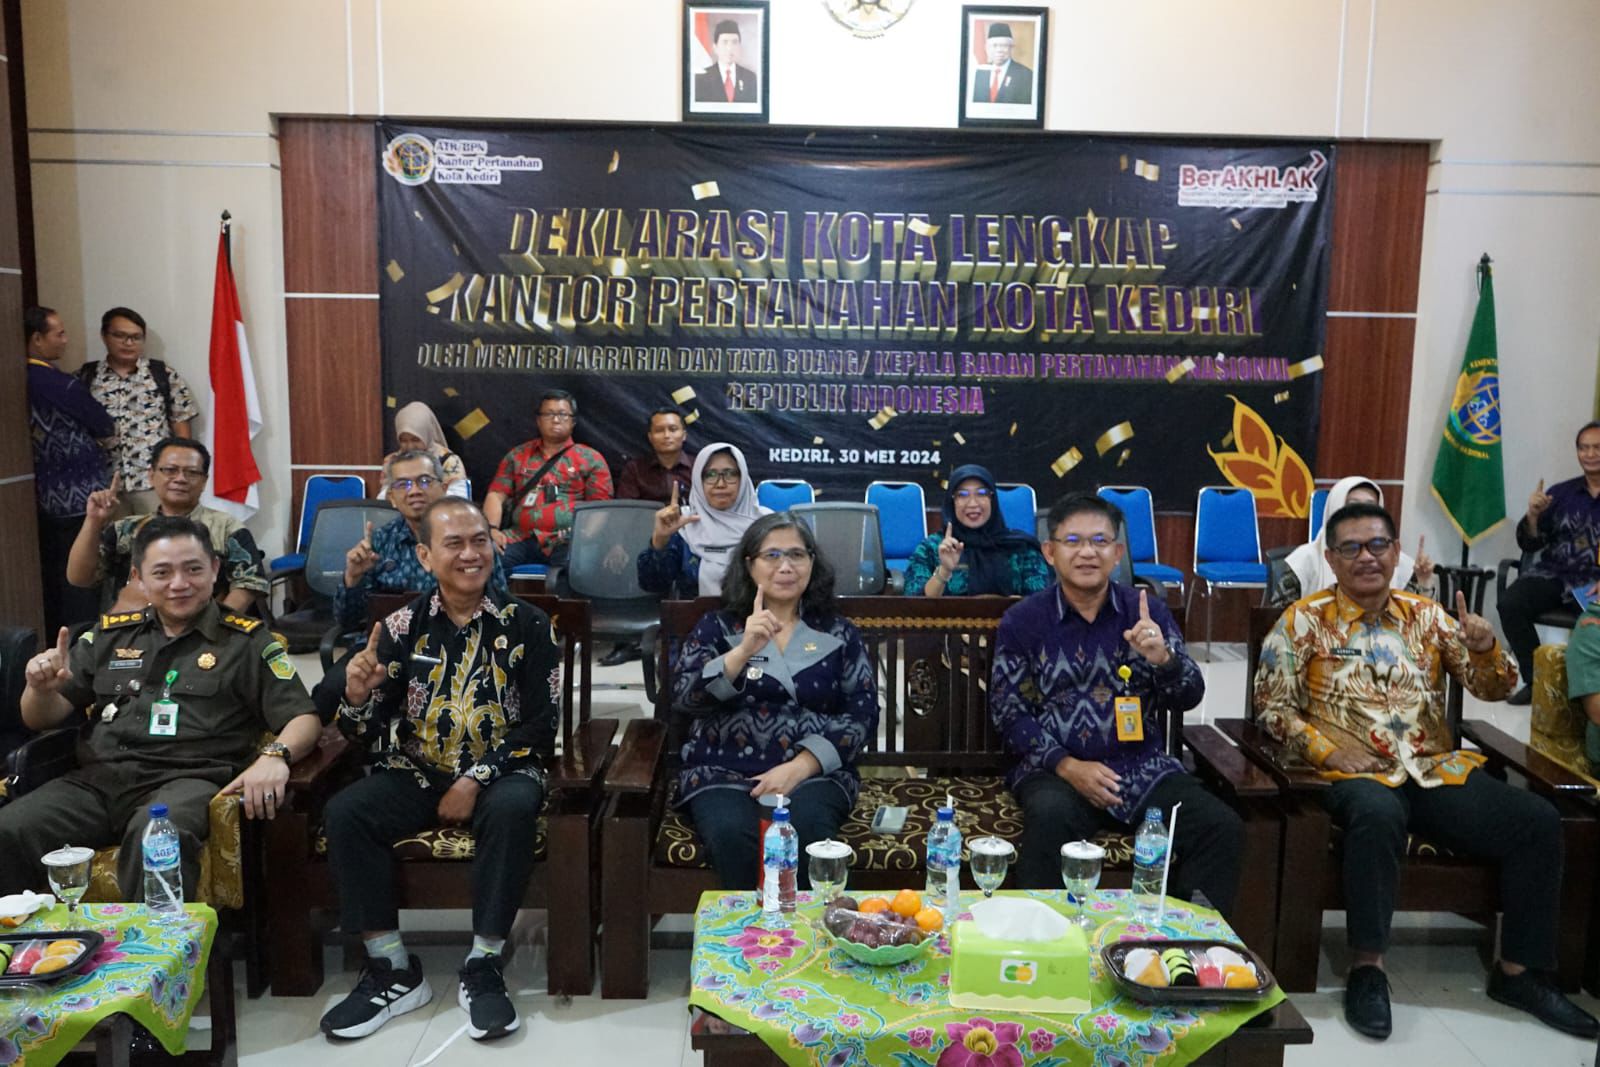 Kota Kediri Dideklarasikan Sebagai Kota Lengkap Oleh Menteri ATR/BPN Republik Indonesia 